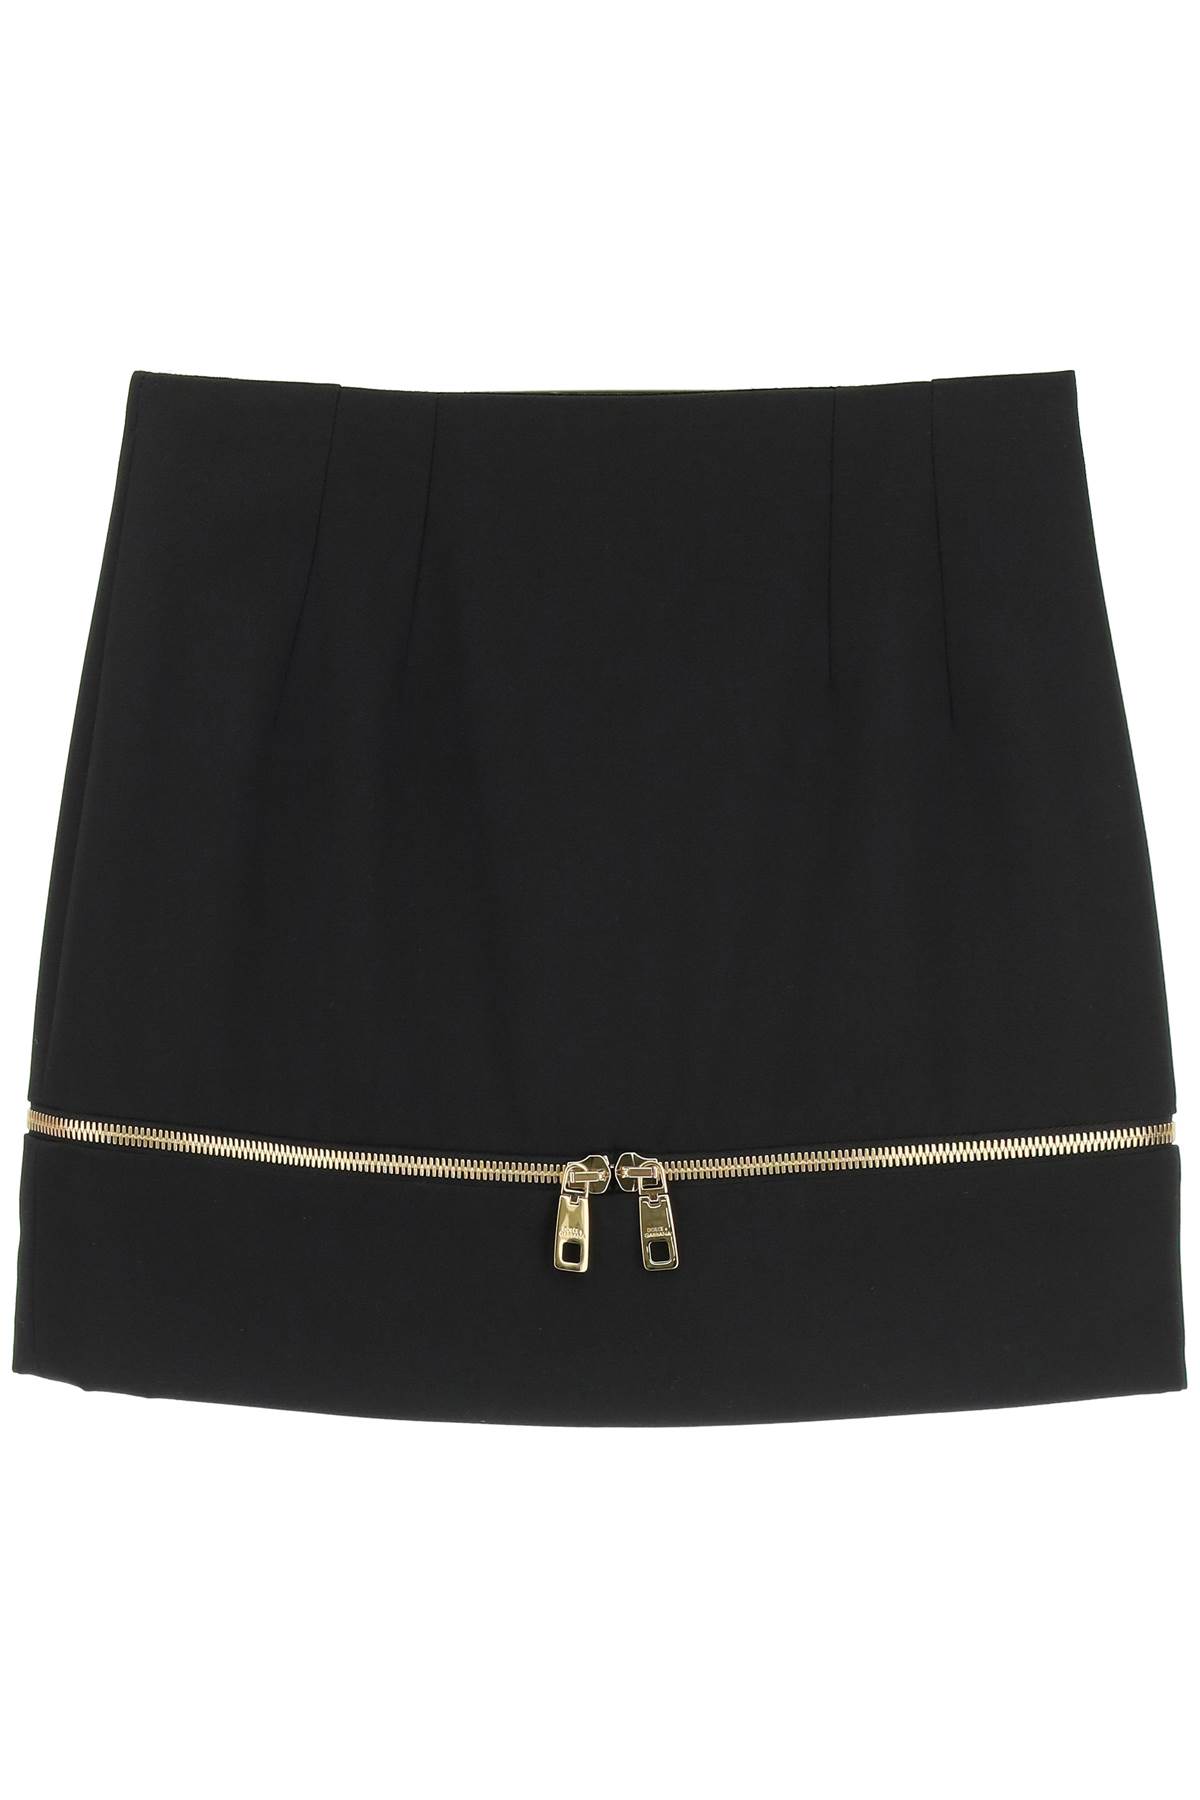 Dolce & Gabbana Mini Skirt With Zip